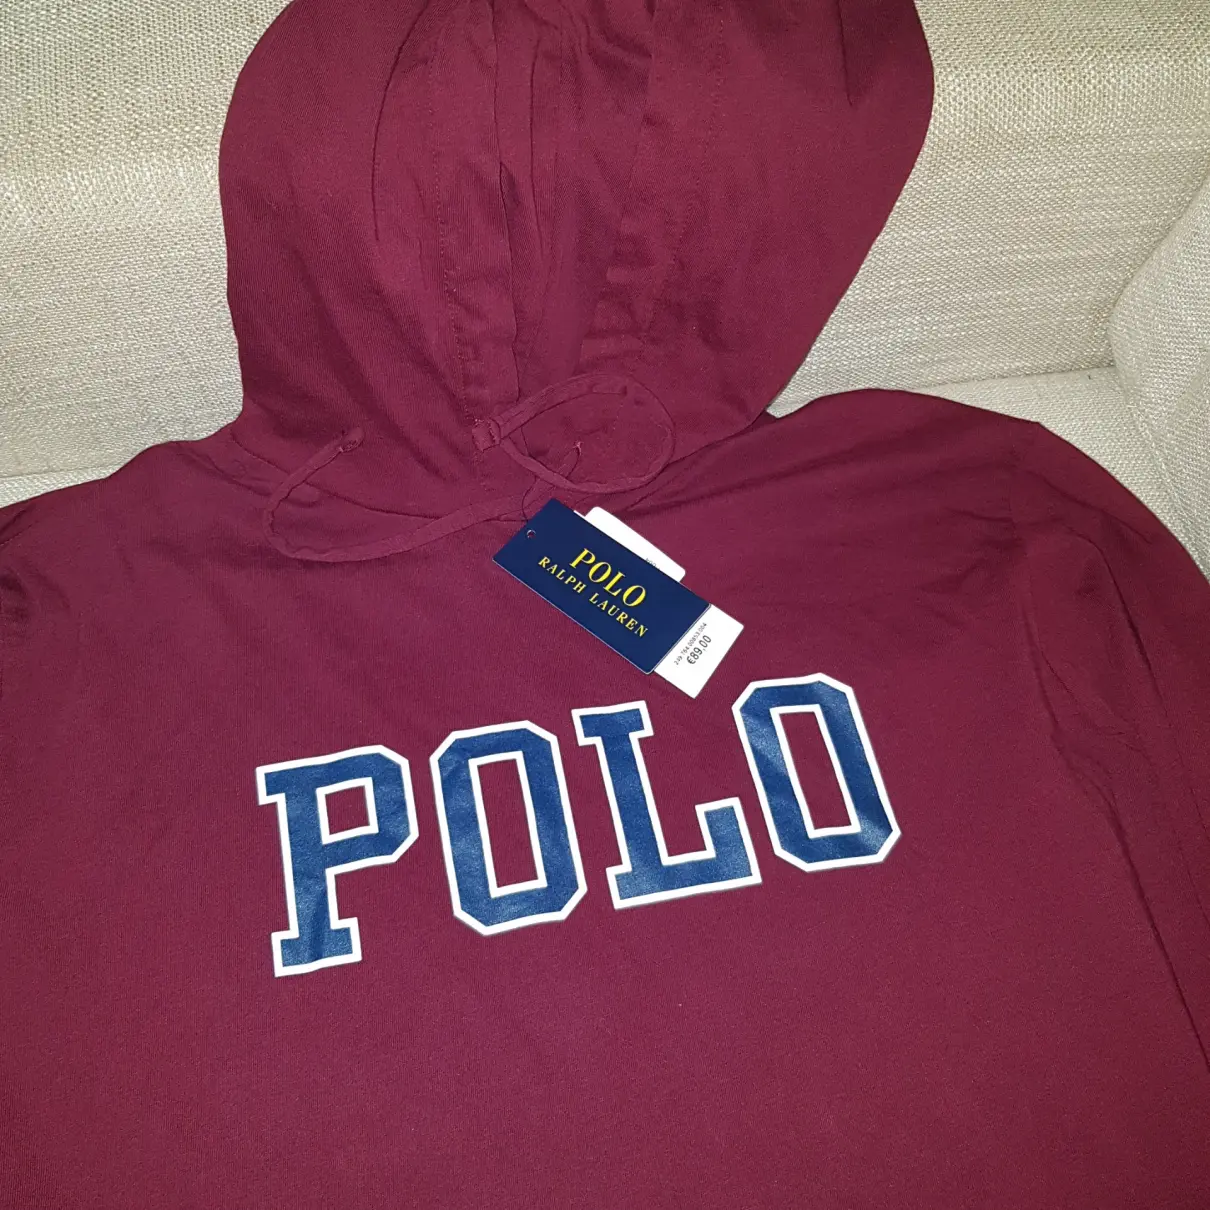 Buy Polo Ralph Lauren Burgundy Cotton Knitwear & Sweatshirt online